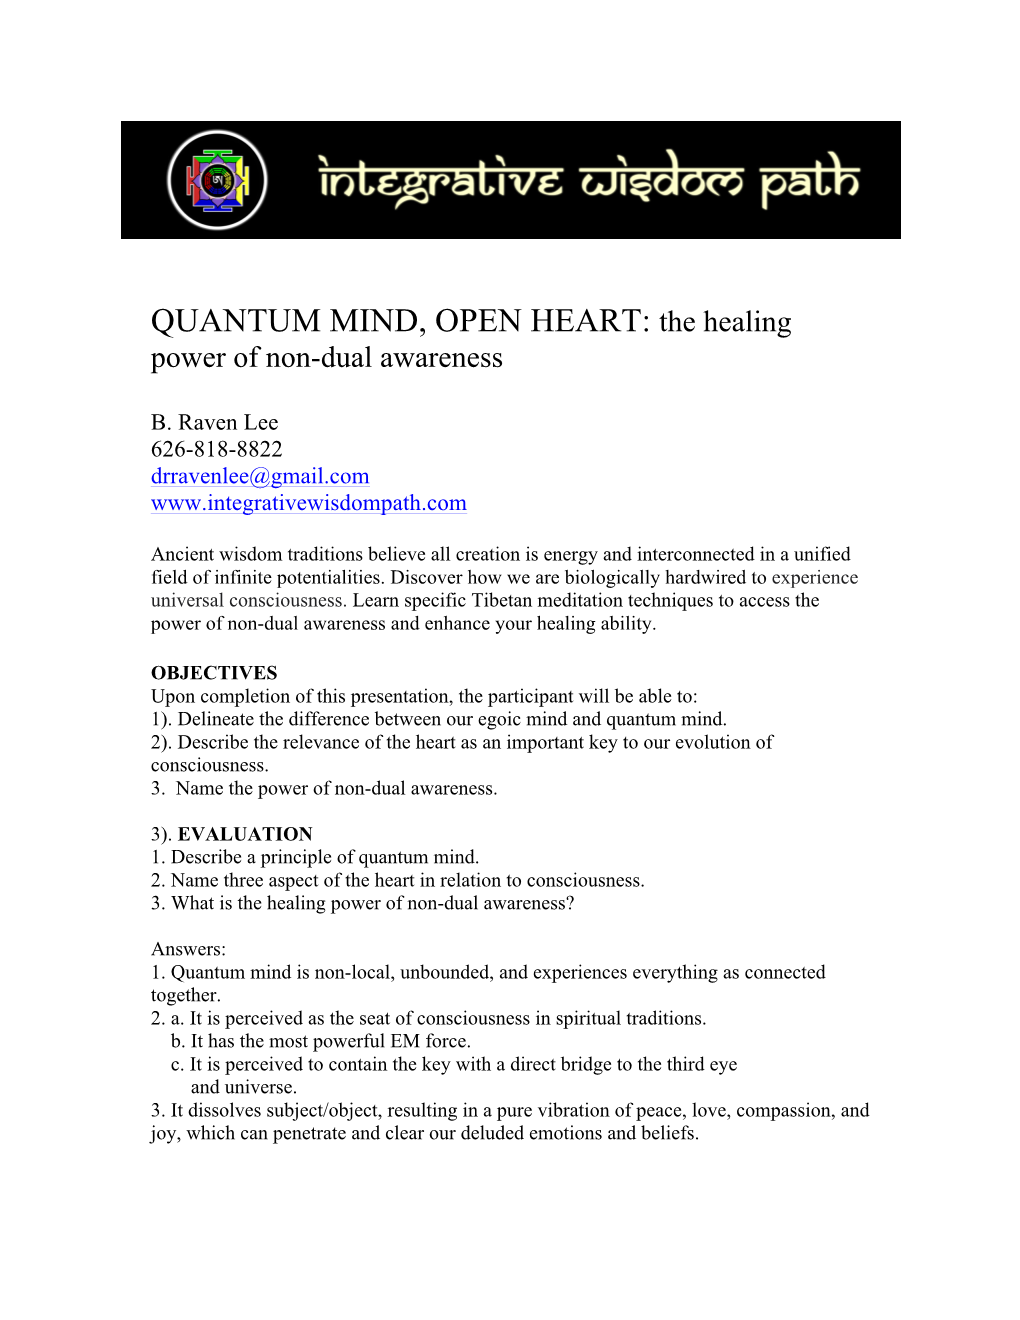 QUANTUM MIND, OPEN HEART: the Healing Power of Non-Dual Awareness